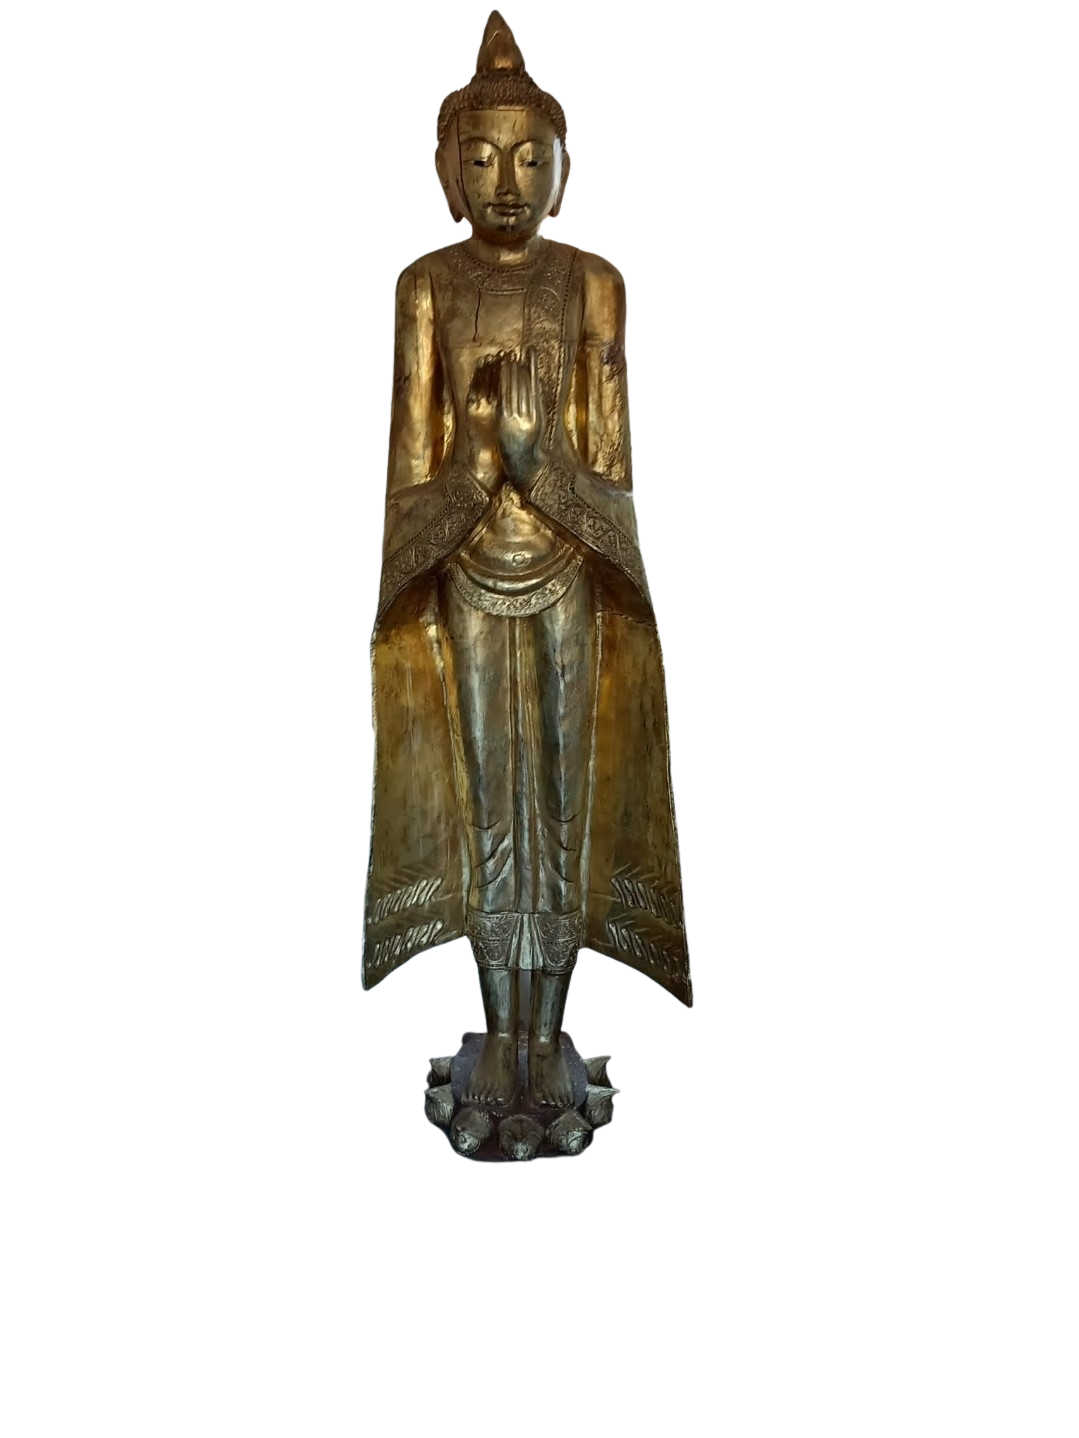 Very beautiful large, wooden Mandalay Buddha statues from Burma.
Mid-Century